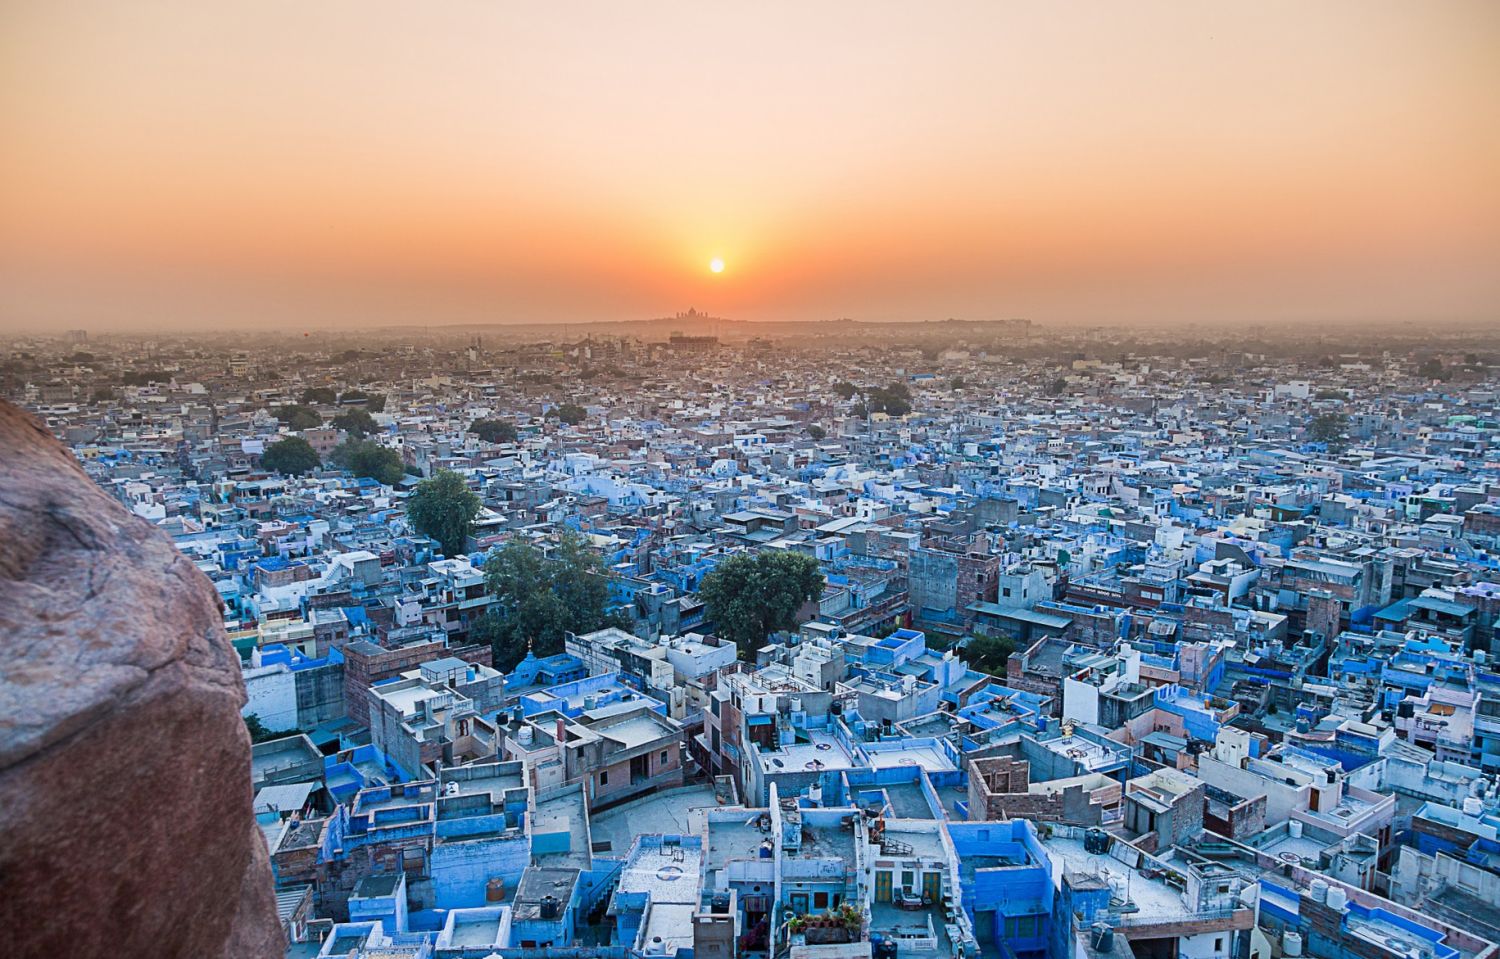 Jodhpur - the Blue City